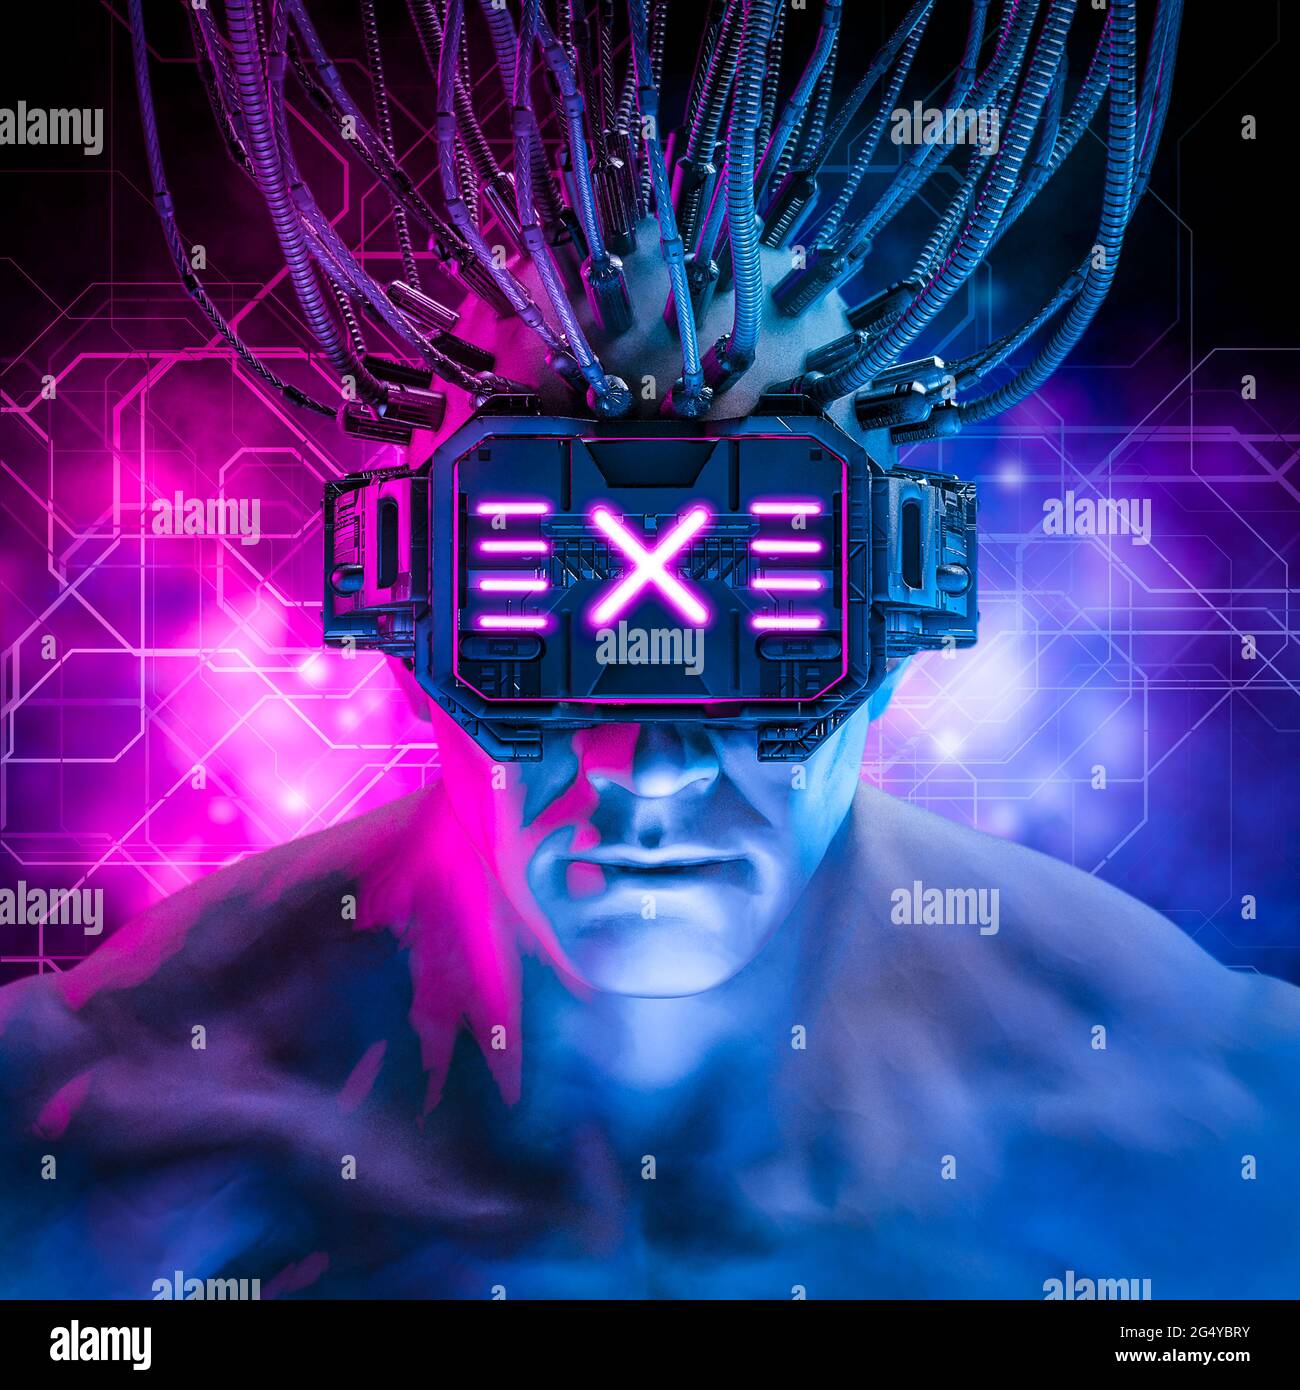 Hardwired cyberpunk man / 3D illustration of science fiction cyberpunk muscular male character wearing futuristic virtual reality glasses Stock Photo